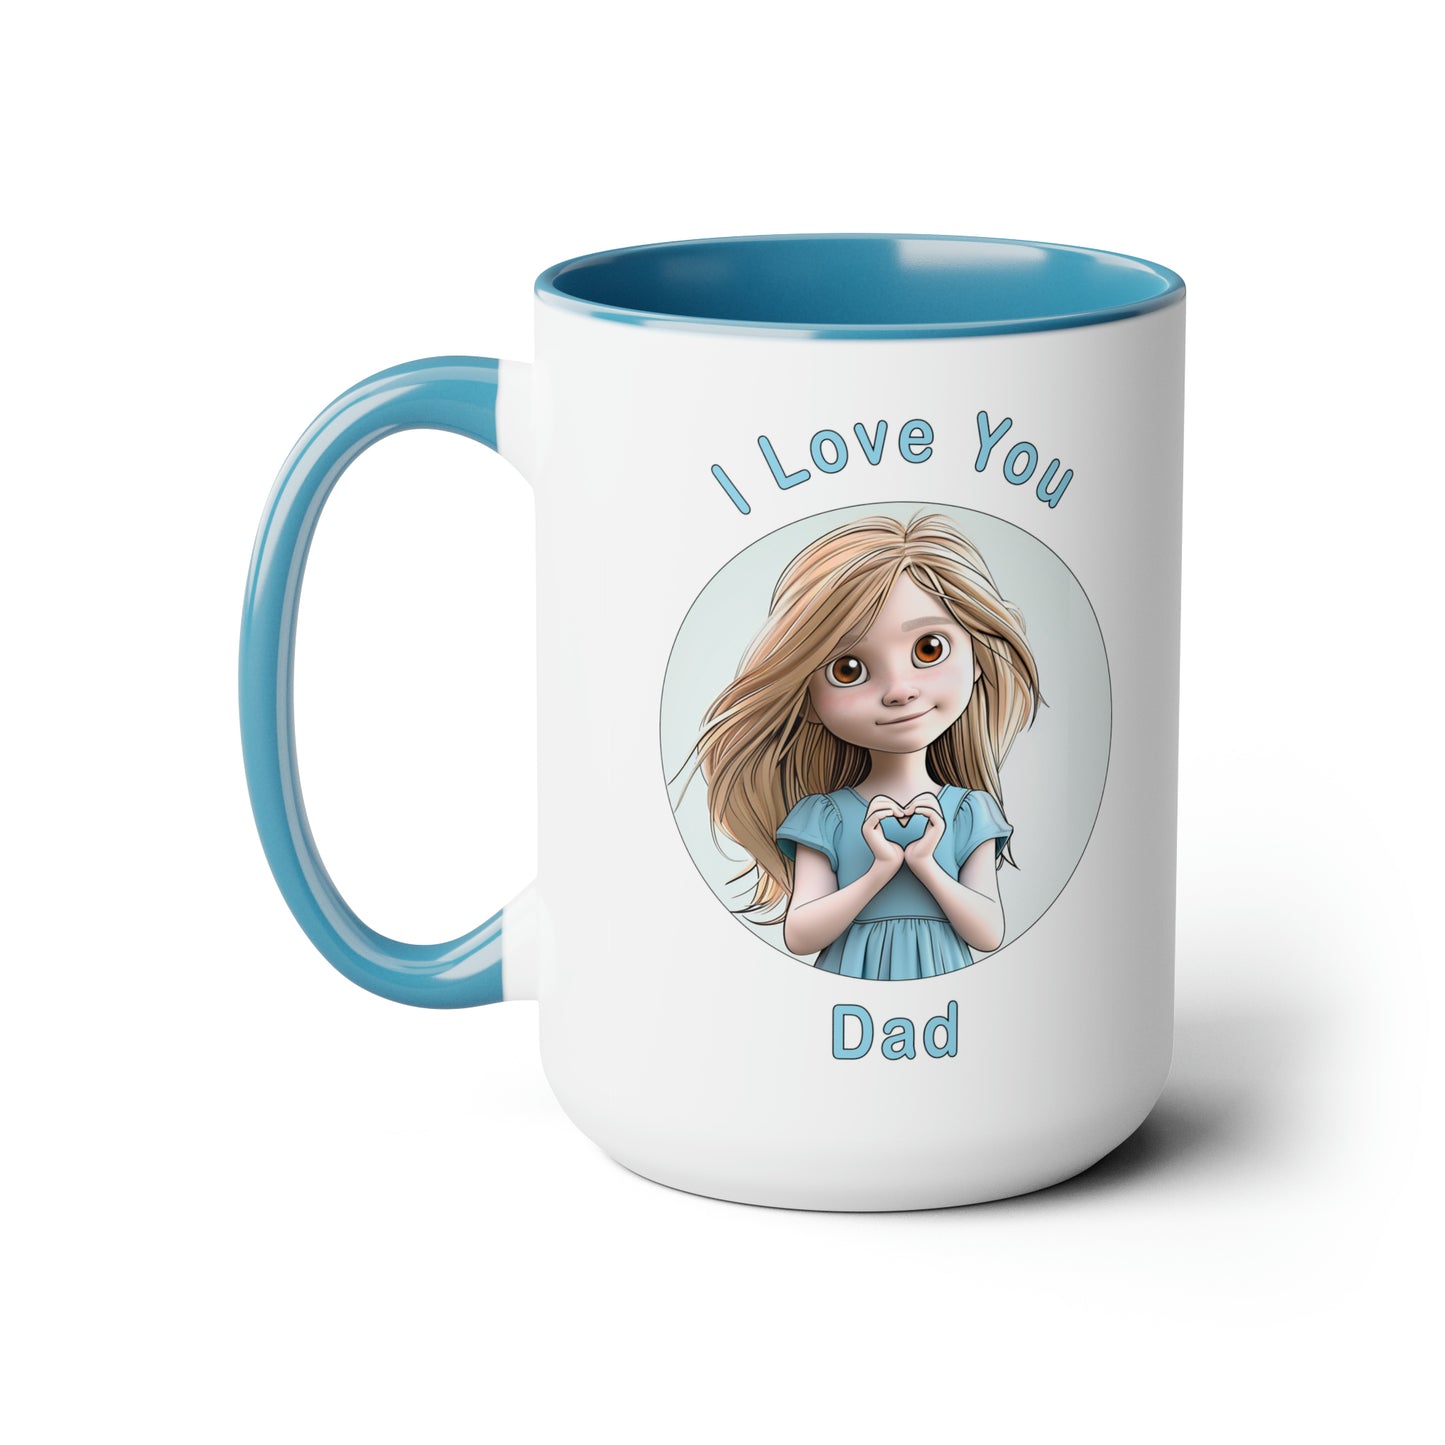 I Love You Dad, Two-Tone Coffee Mugs, 15oz